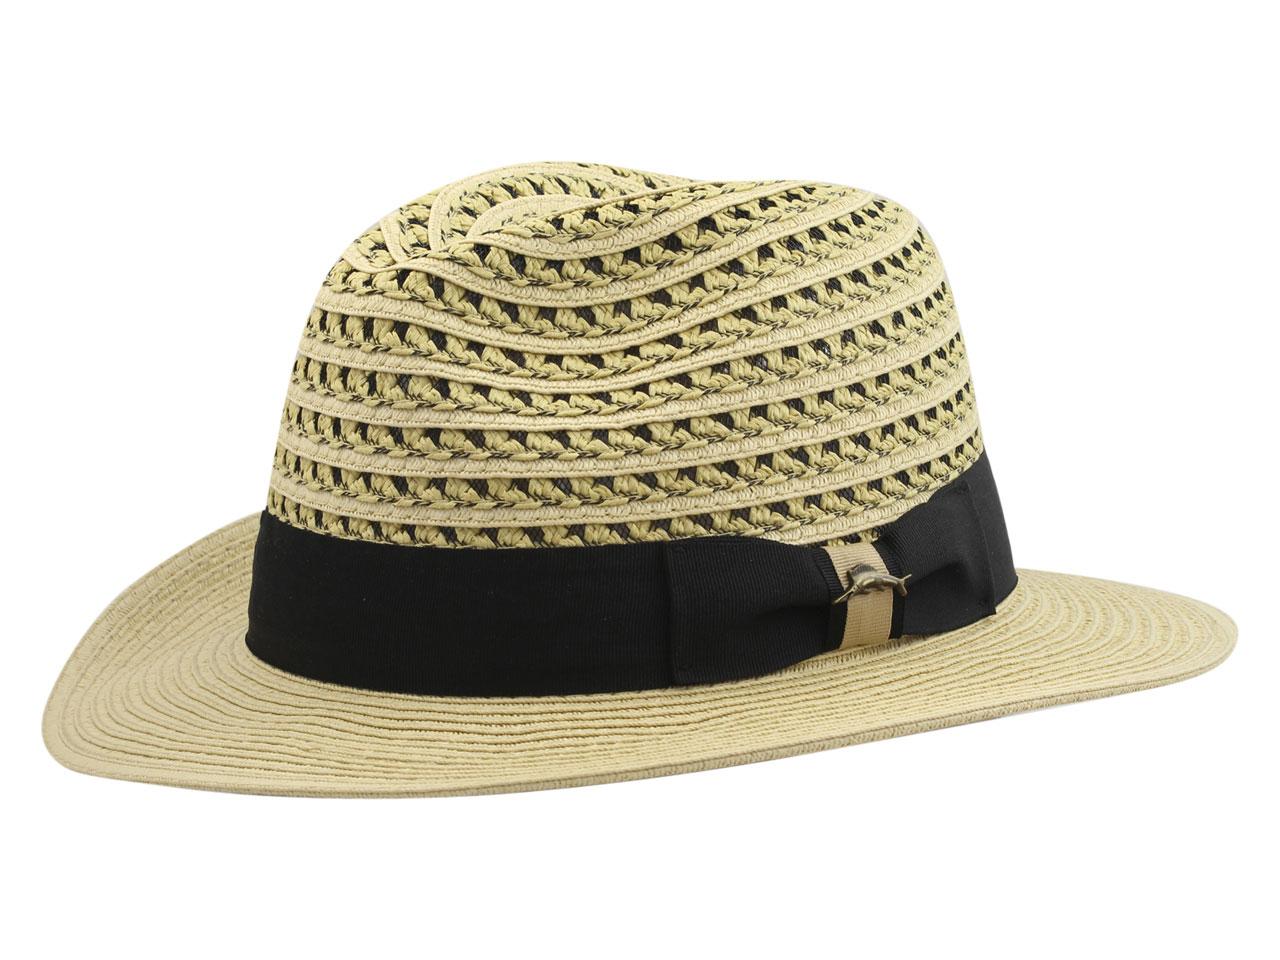 Tommy Bahama Men's Two-Tone Safari Hat